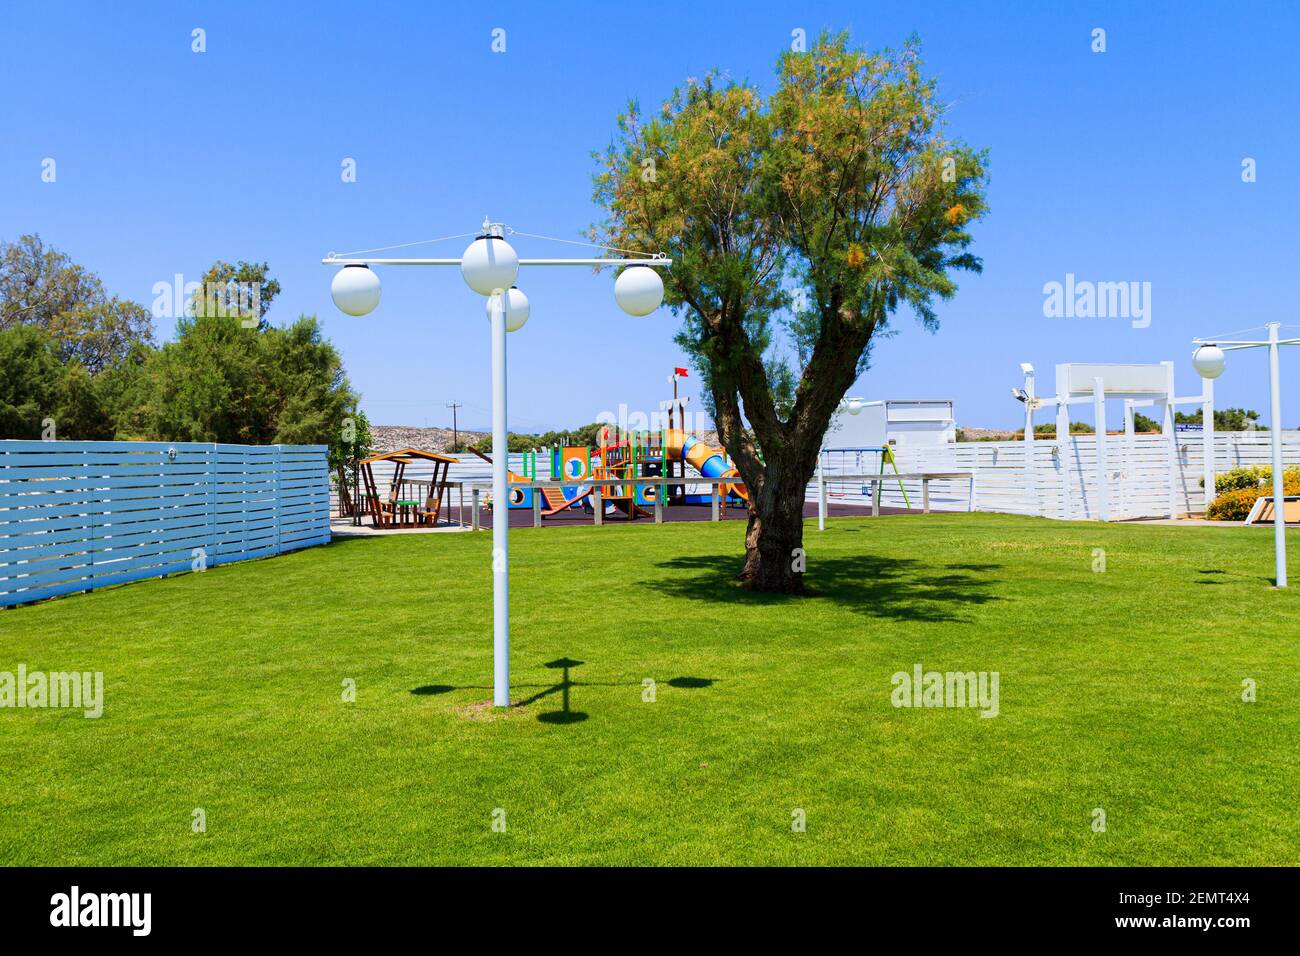 Children's wooden playground recreation area at public park Stock Photo